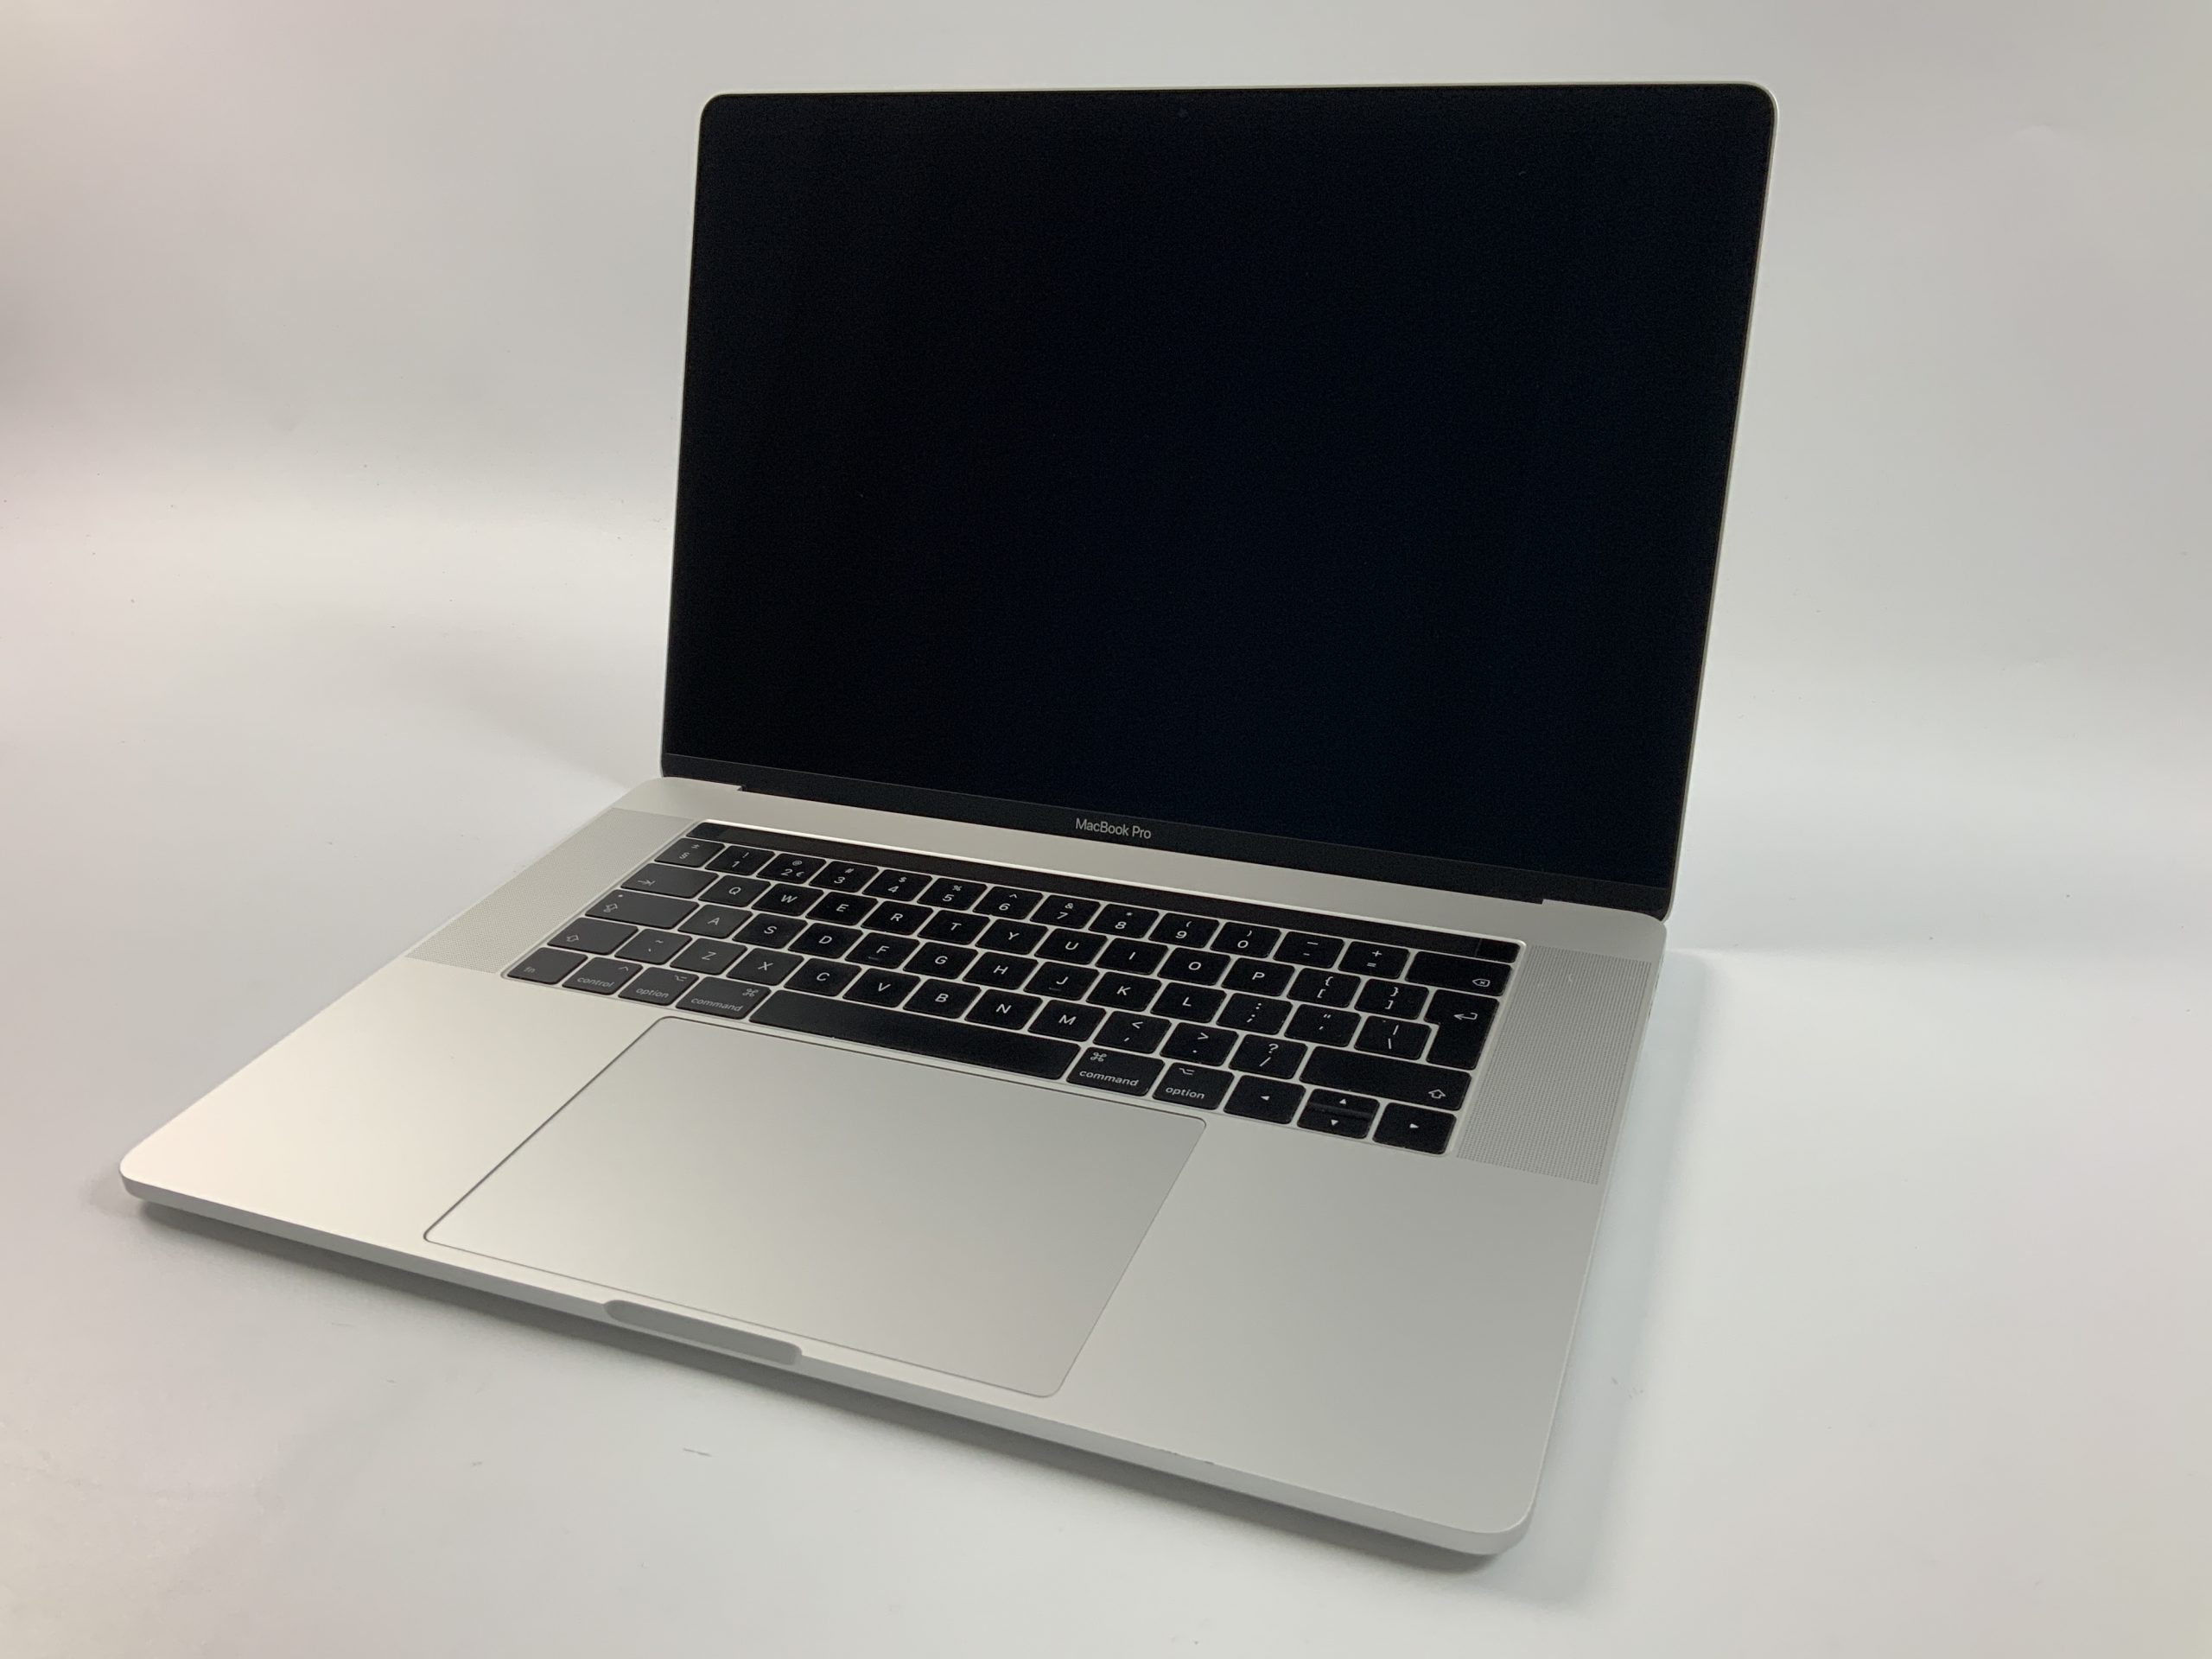 MacBook Pro 15" Touch Bar Mid 2017 (Intel Quad-Core i7 2.8 GHz 16 GB RAM 512 GB SSD), Silver, Intel Quad-Core i7 2.8 GHz, 16 GB RAM, 512 GB SSD, imagen 1